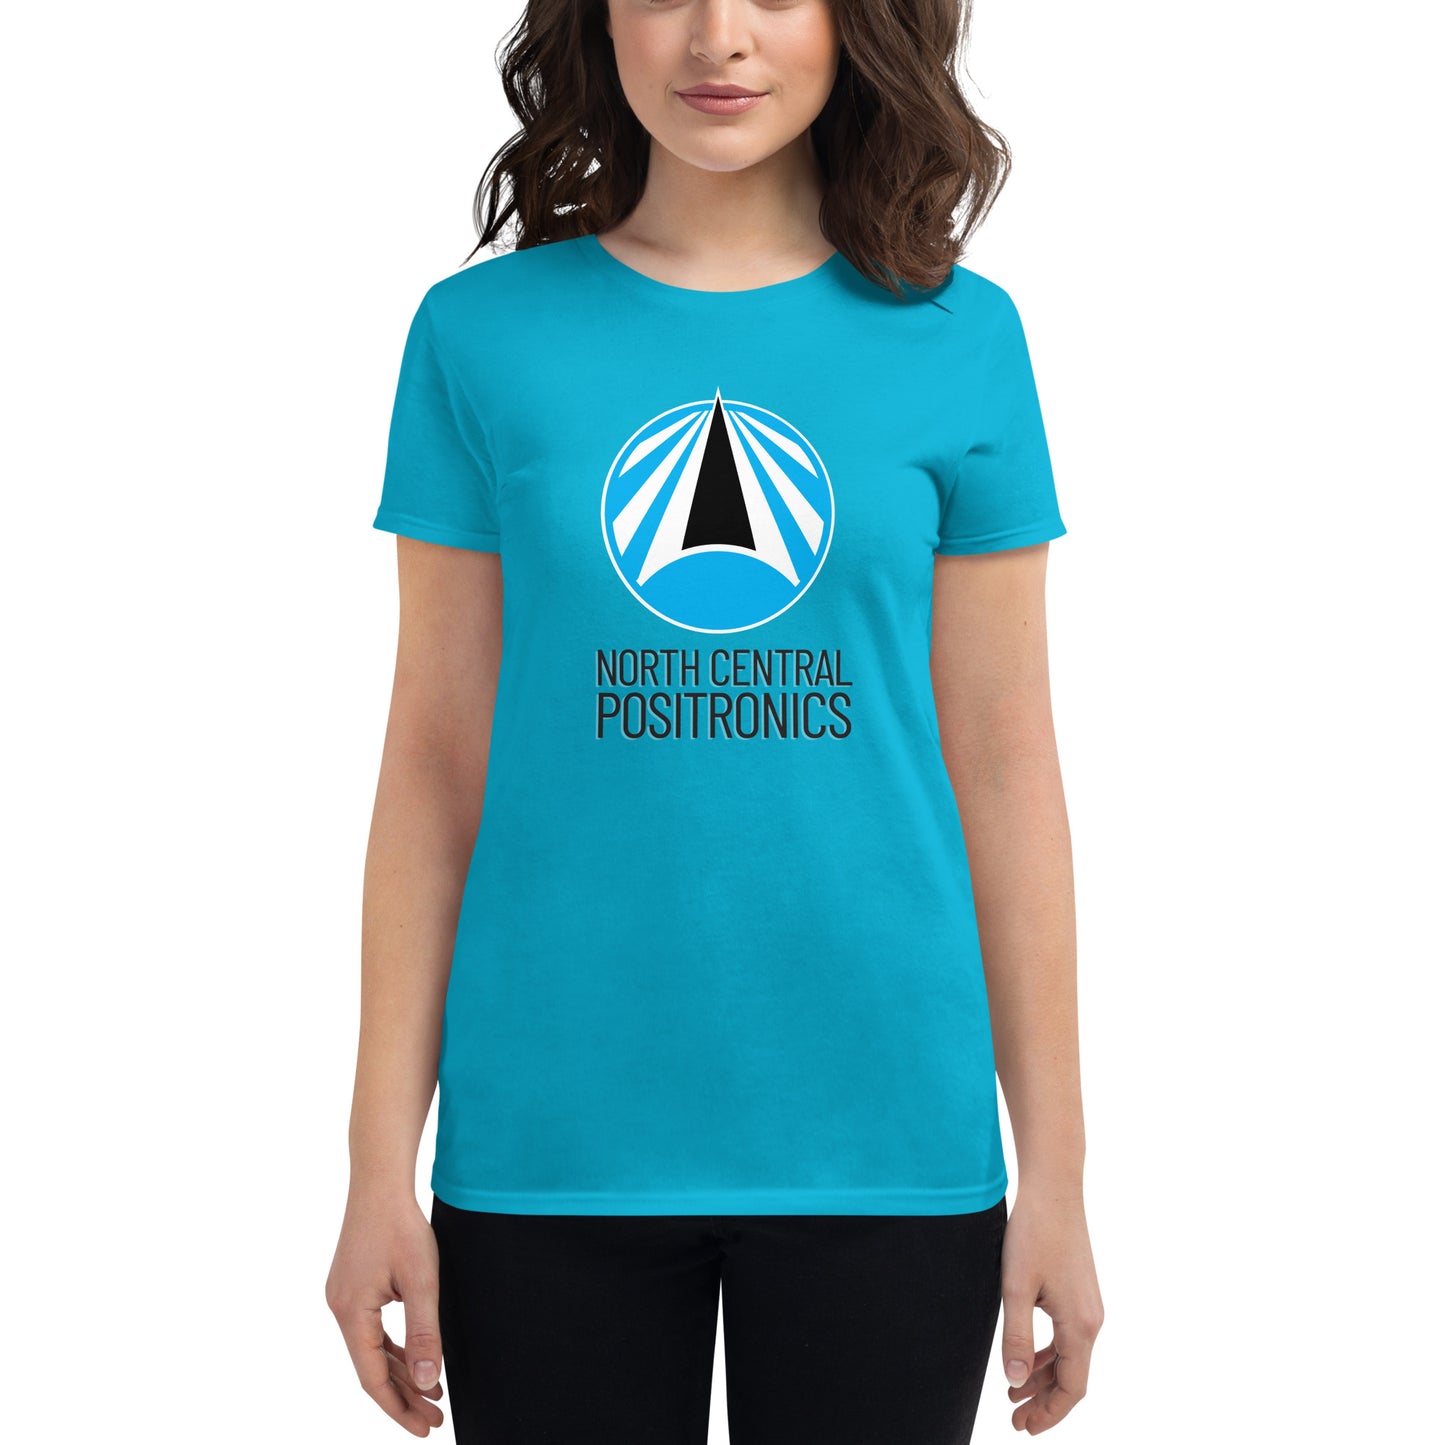 North Central Positronics T-Shirt, Black Logo, Women's Fit